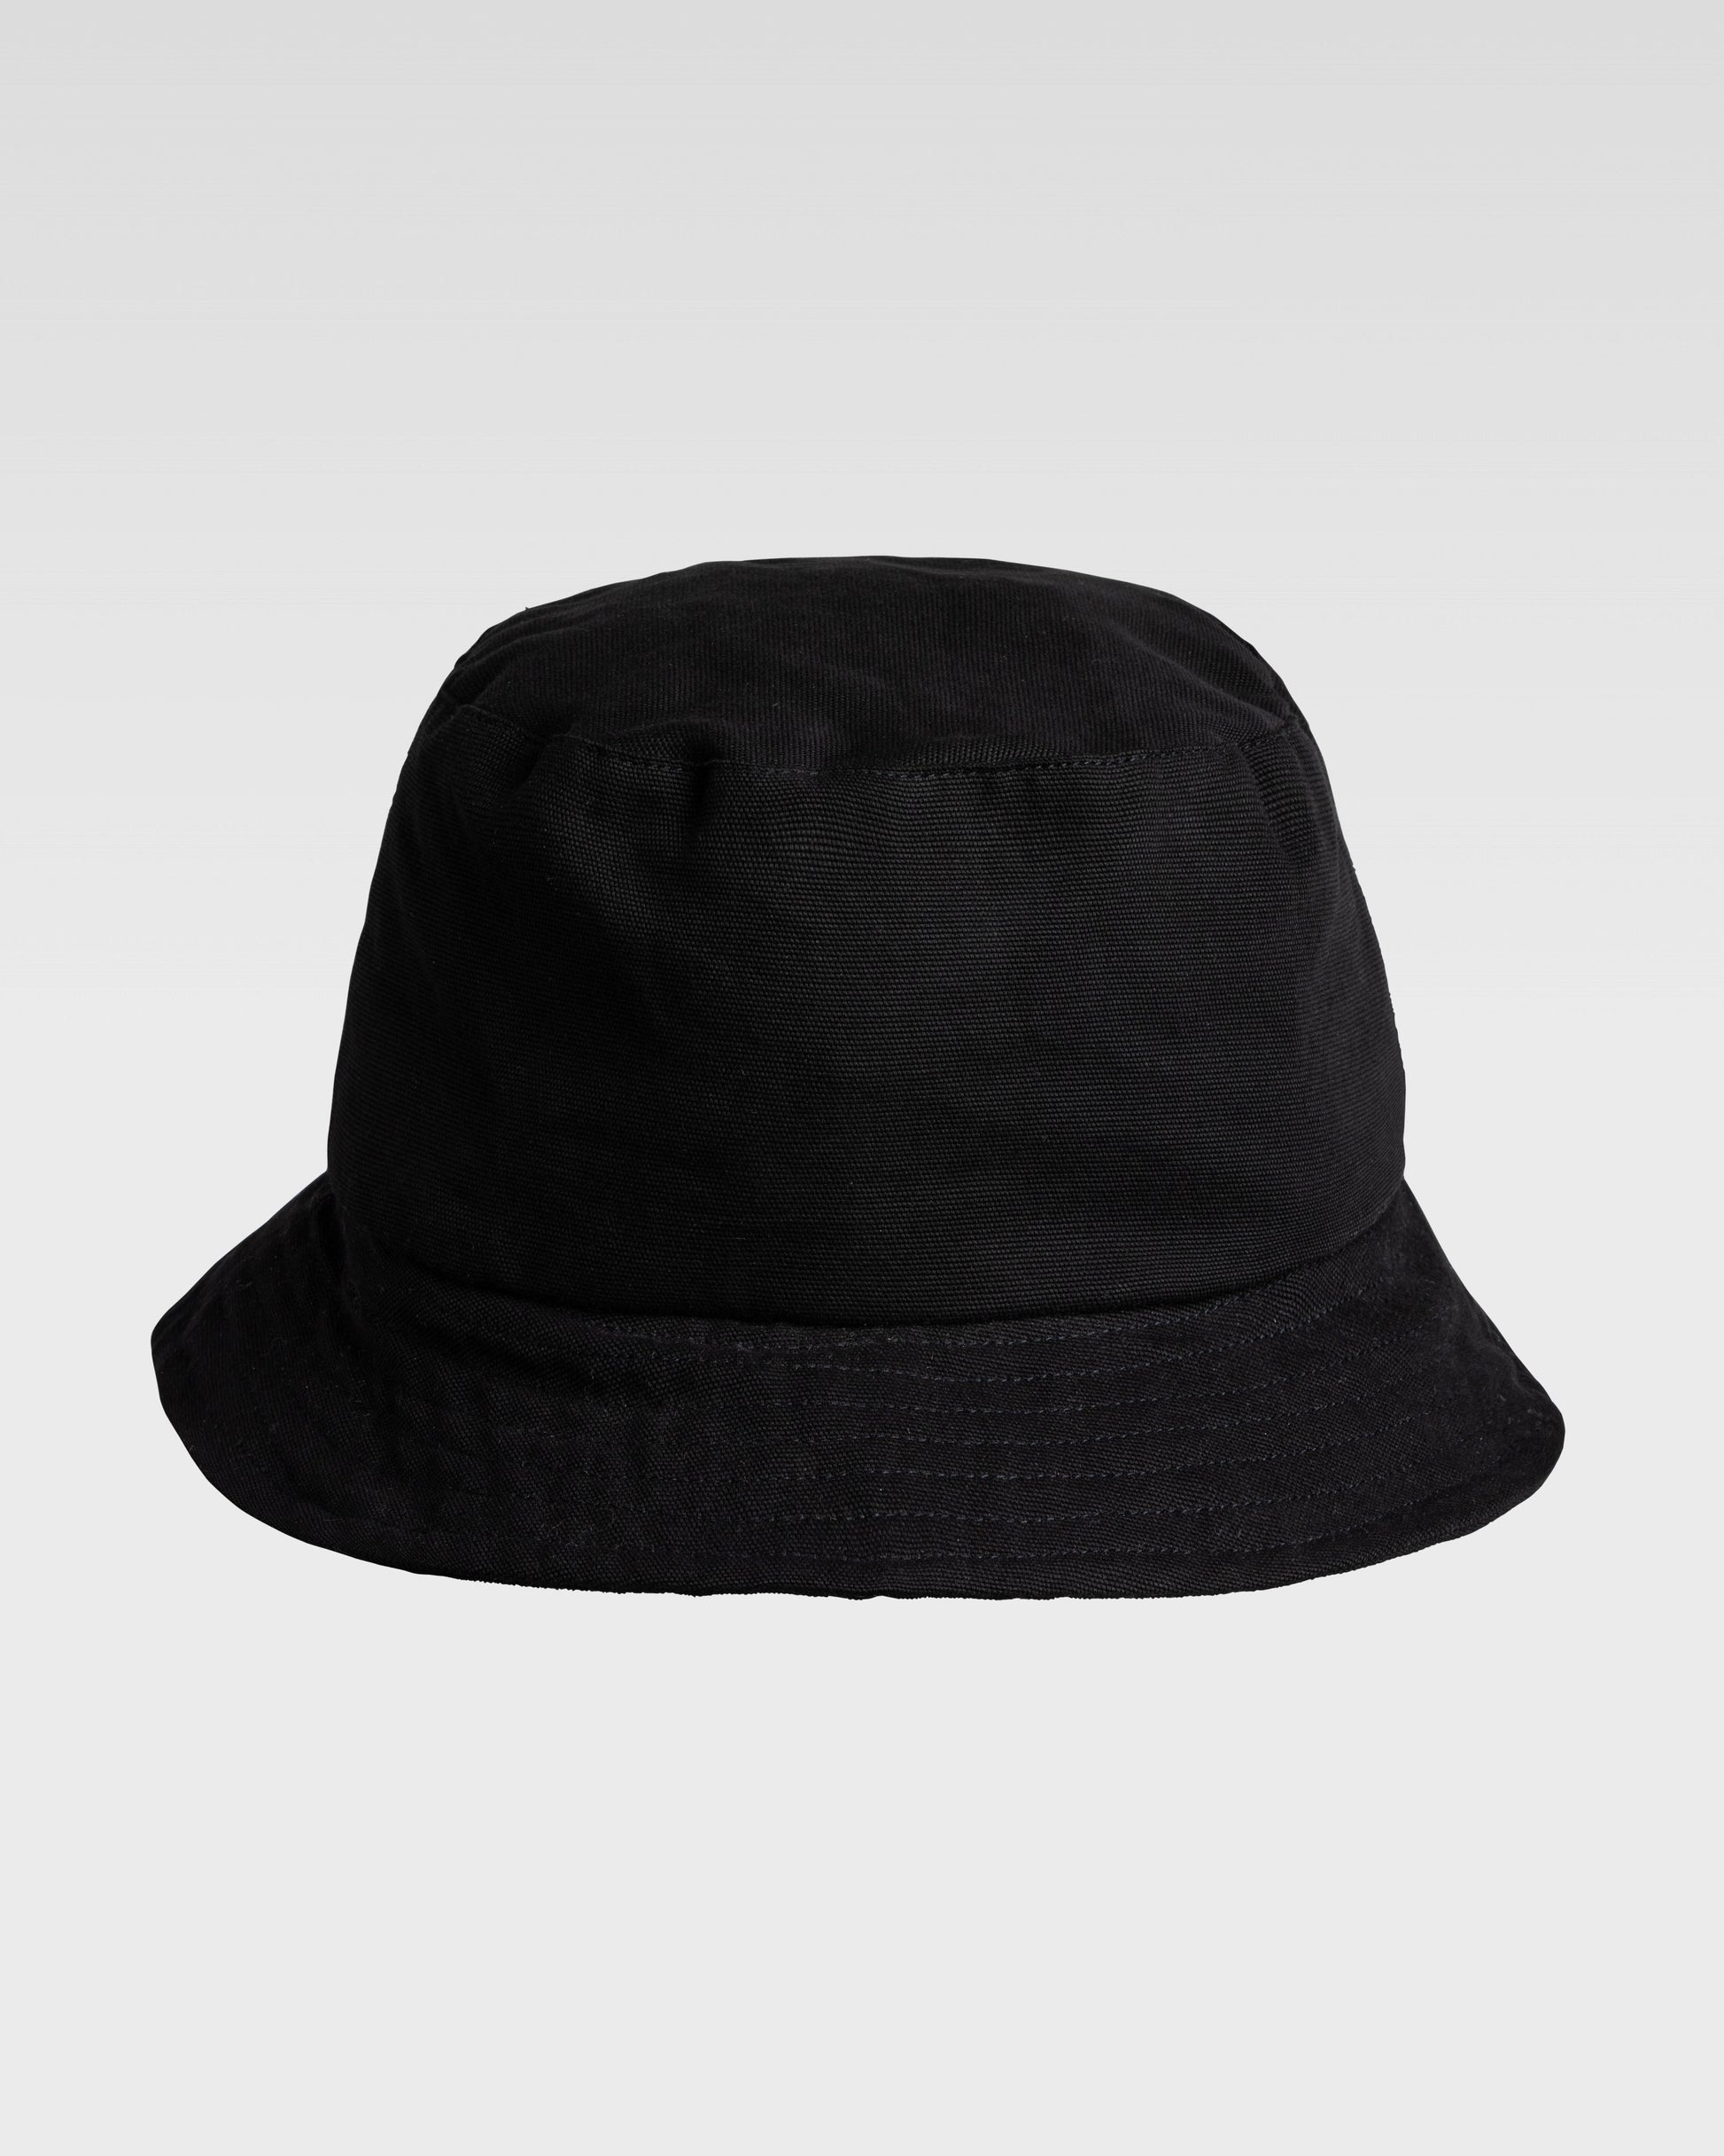 bucket-hat-travelling-black-v--avnier-marque-orelsan-3-packshot-dos_6688b454-93fa-4af4-ada6-fd0b4a7ead01 - noir